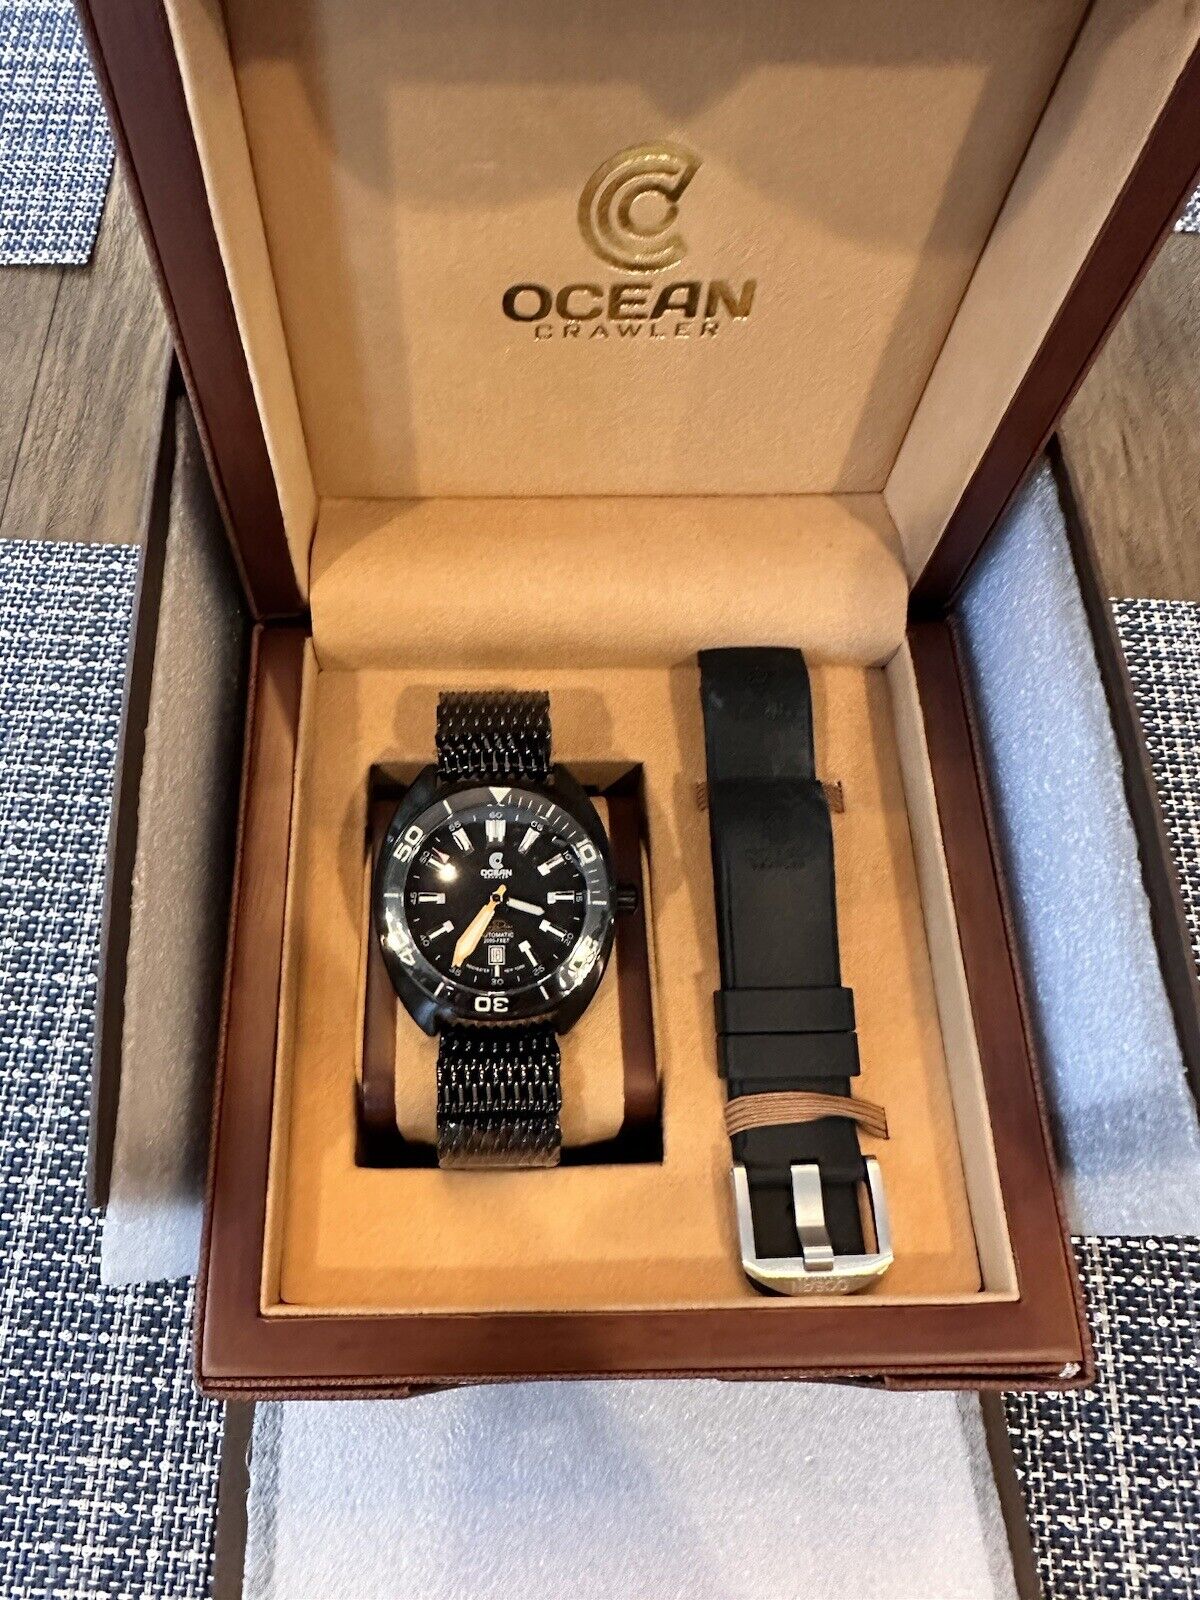 Ocean Crawler Core Diver - Ultra-Black DLC Dive watch